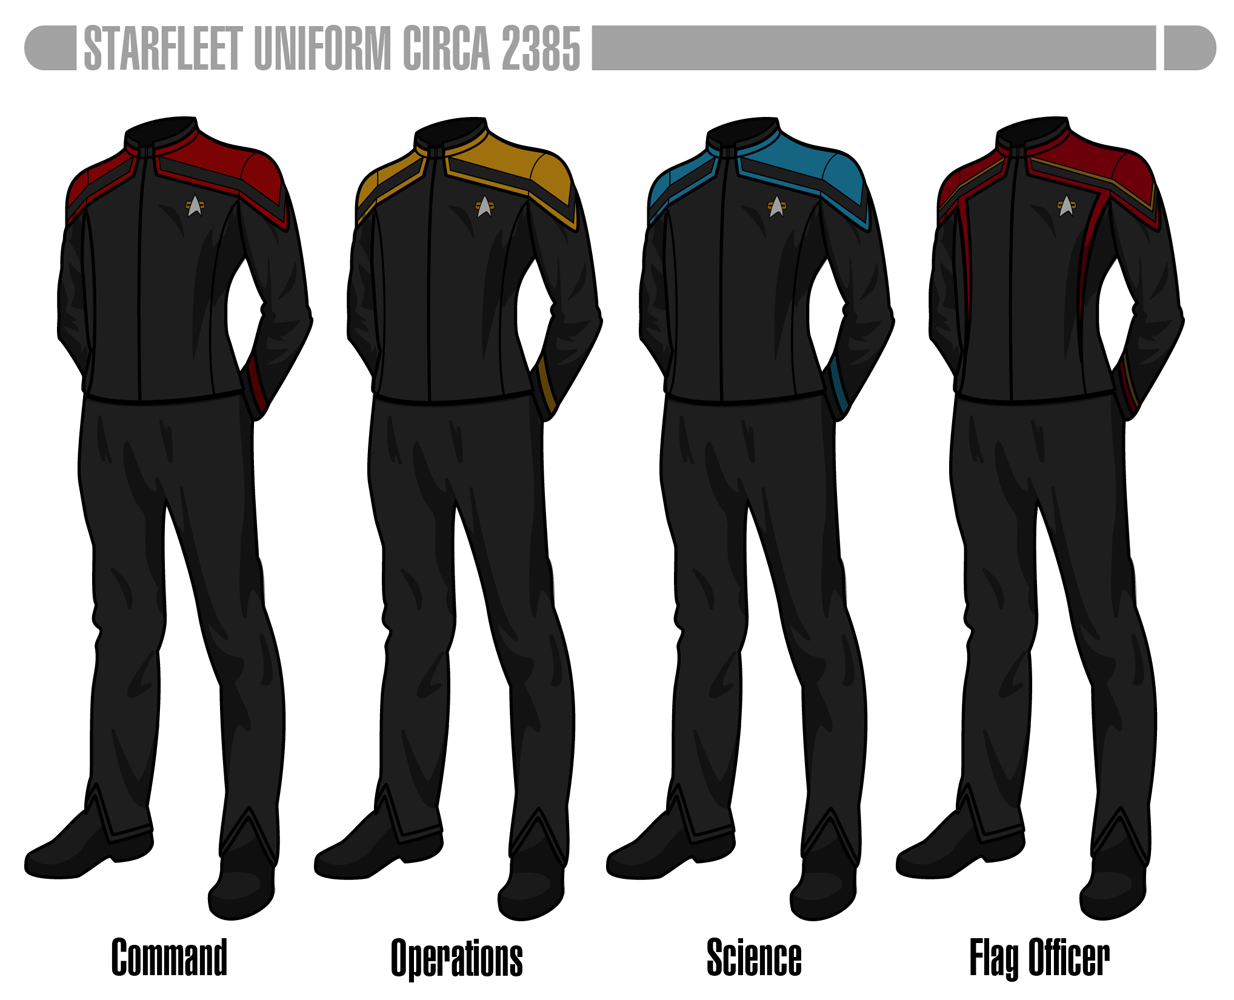 Star Trek Picard Uniform 2385. Star trek uniforms, Star trek outfits, Star trek costume